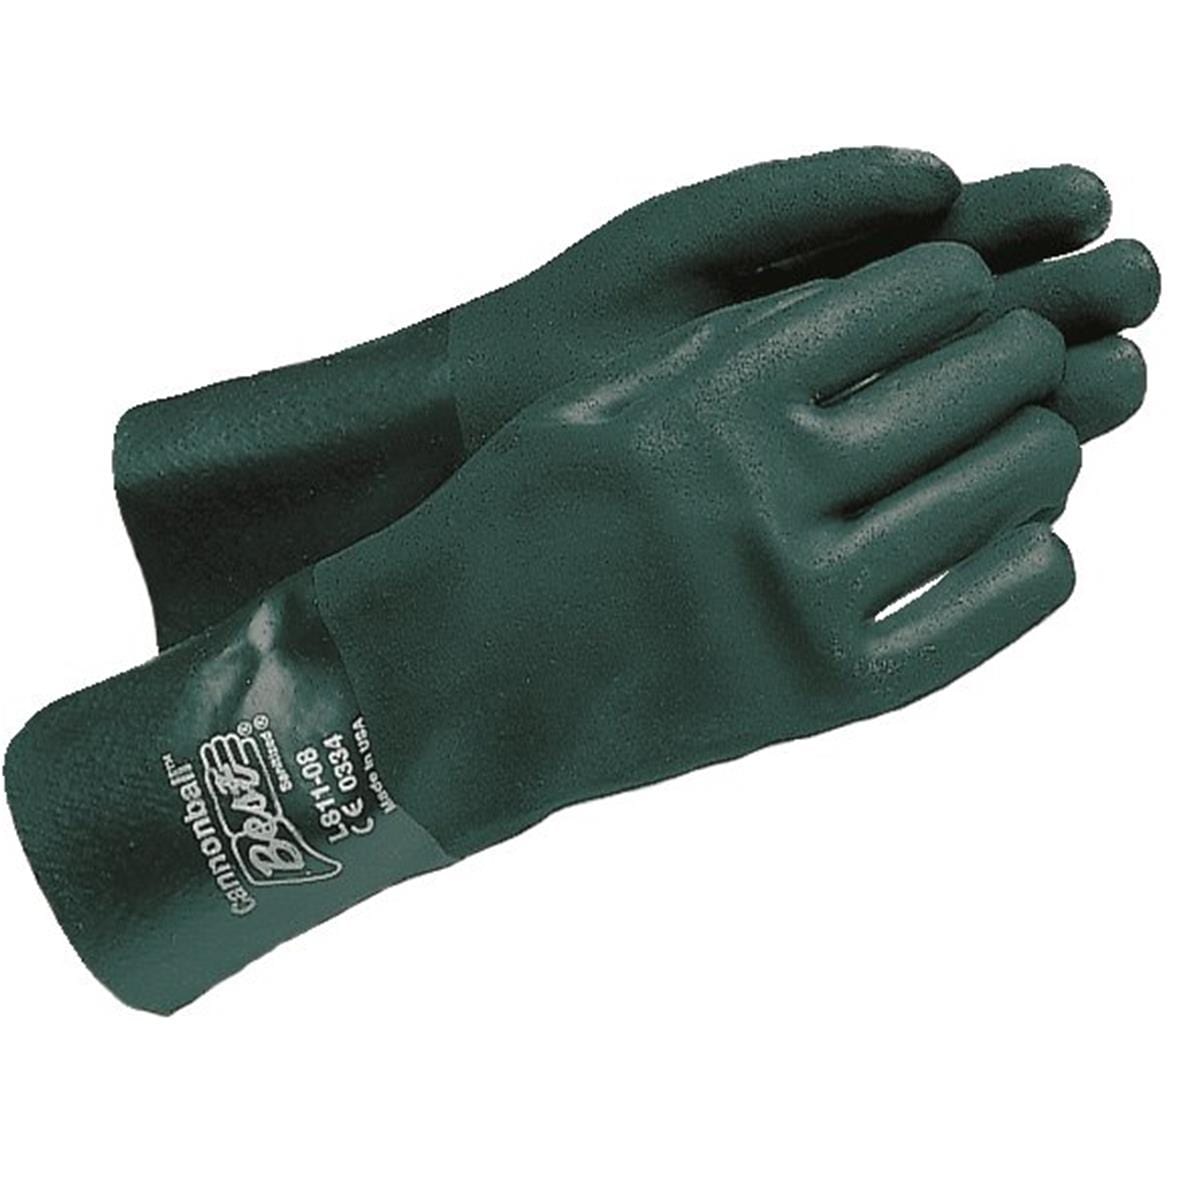 SHOWA BEST PVC-coated Gloves